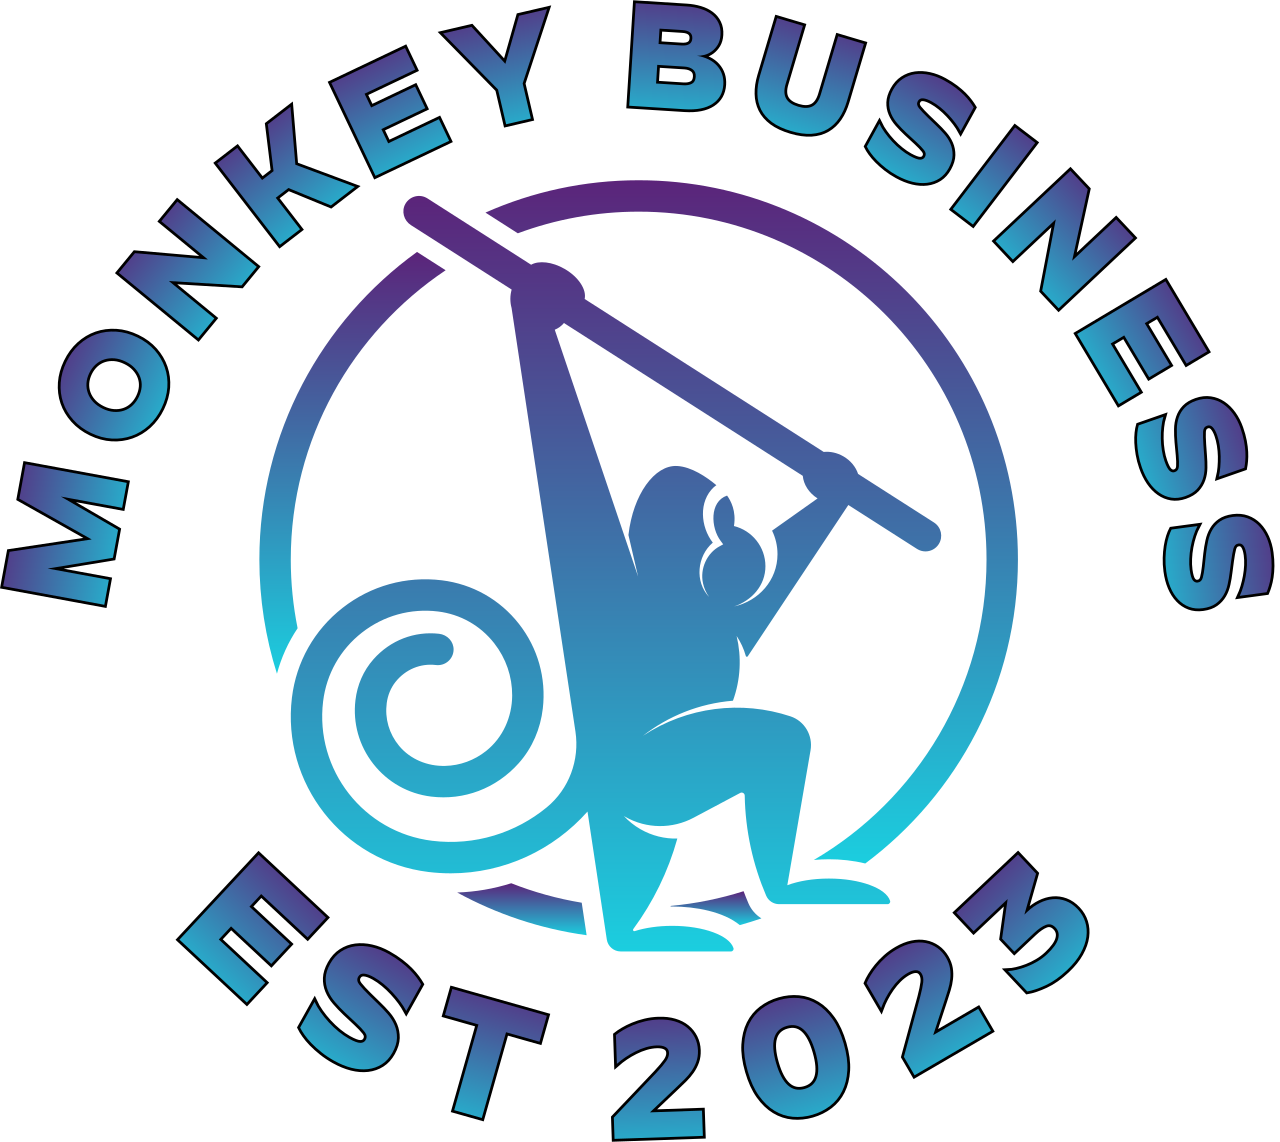 Monkey business's logo